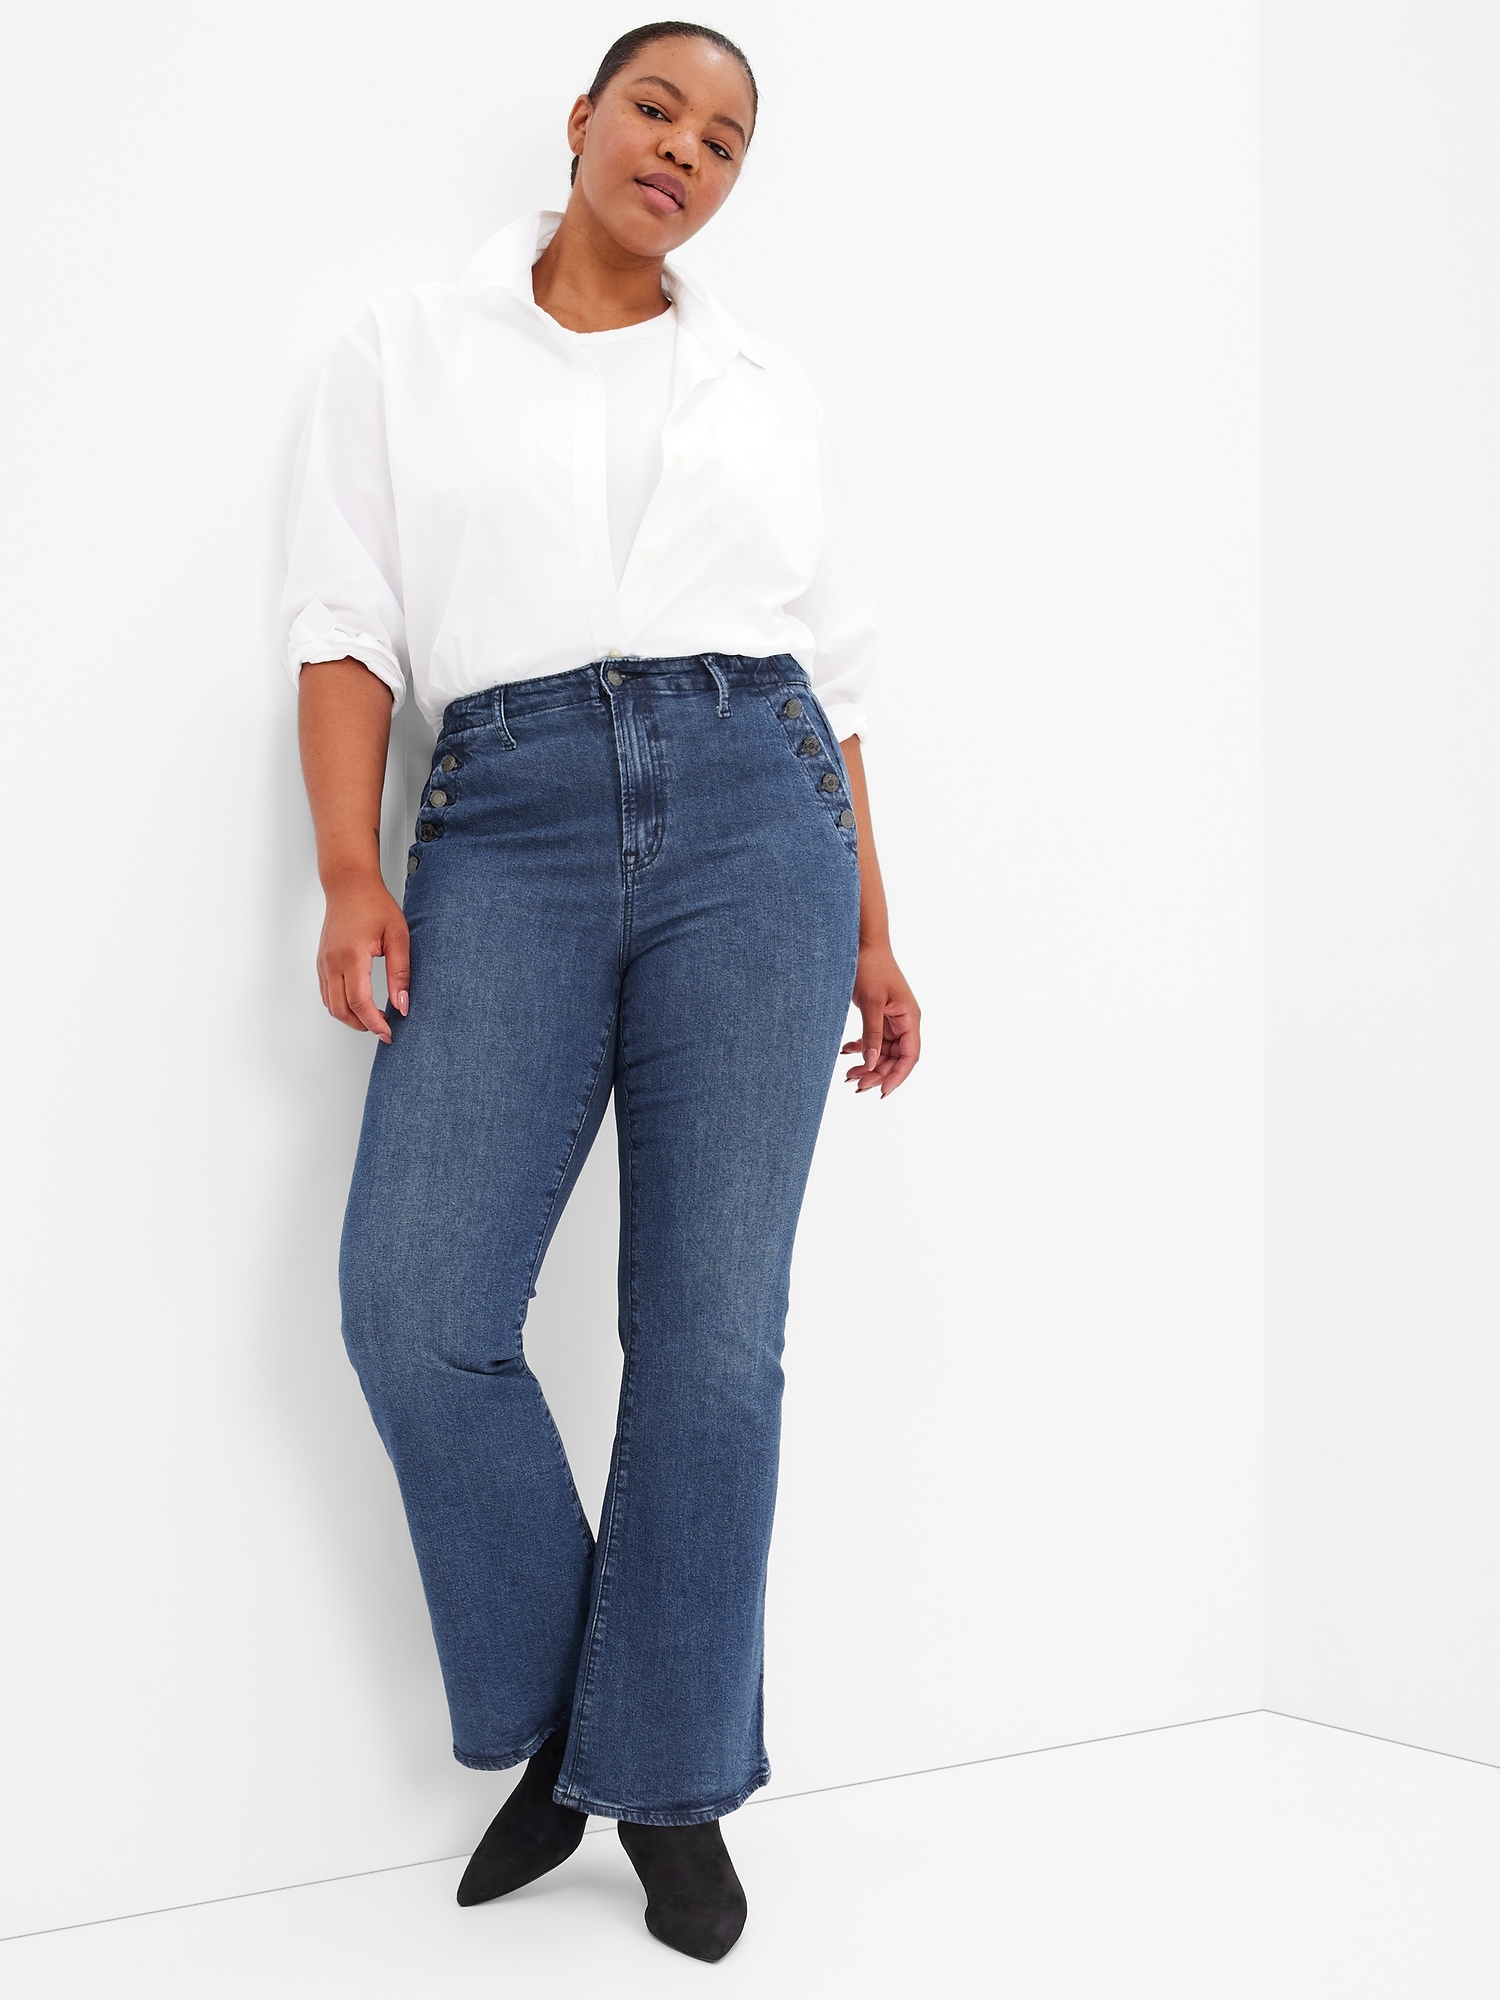 Gap Women's High Rise Wide-Leg Jeans